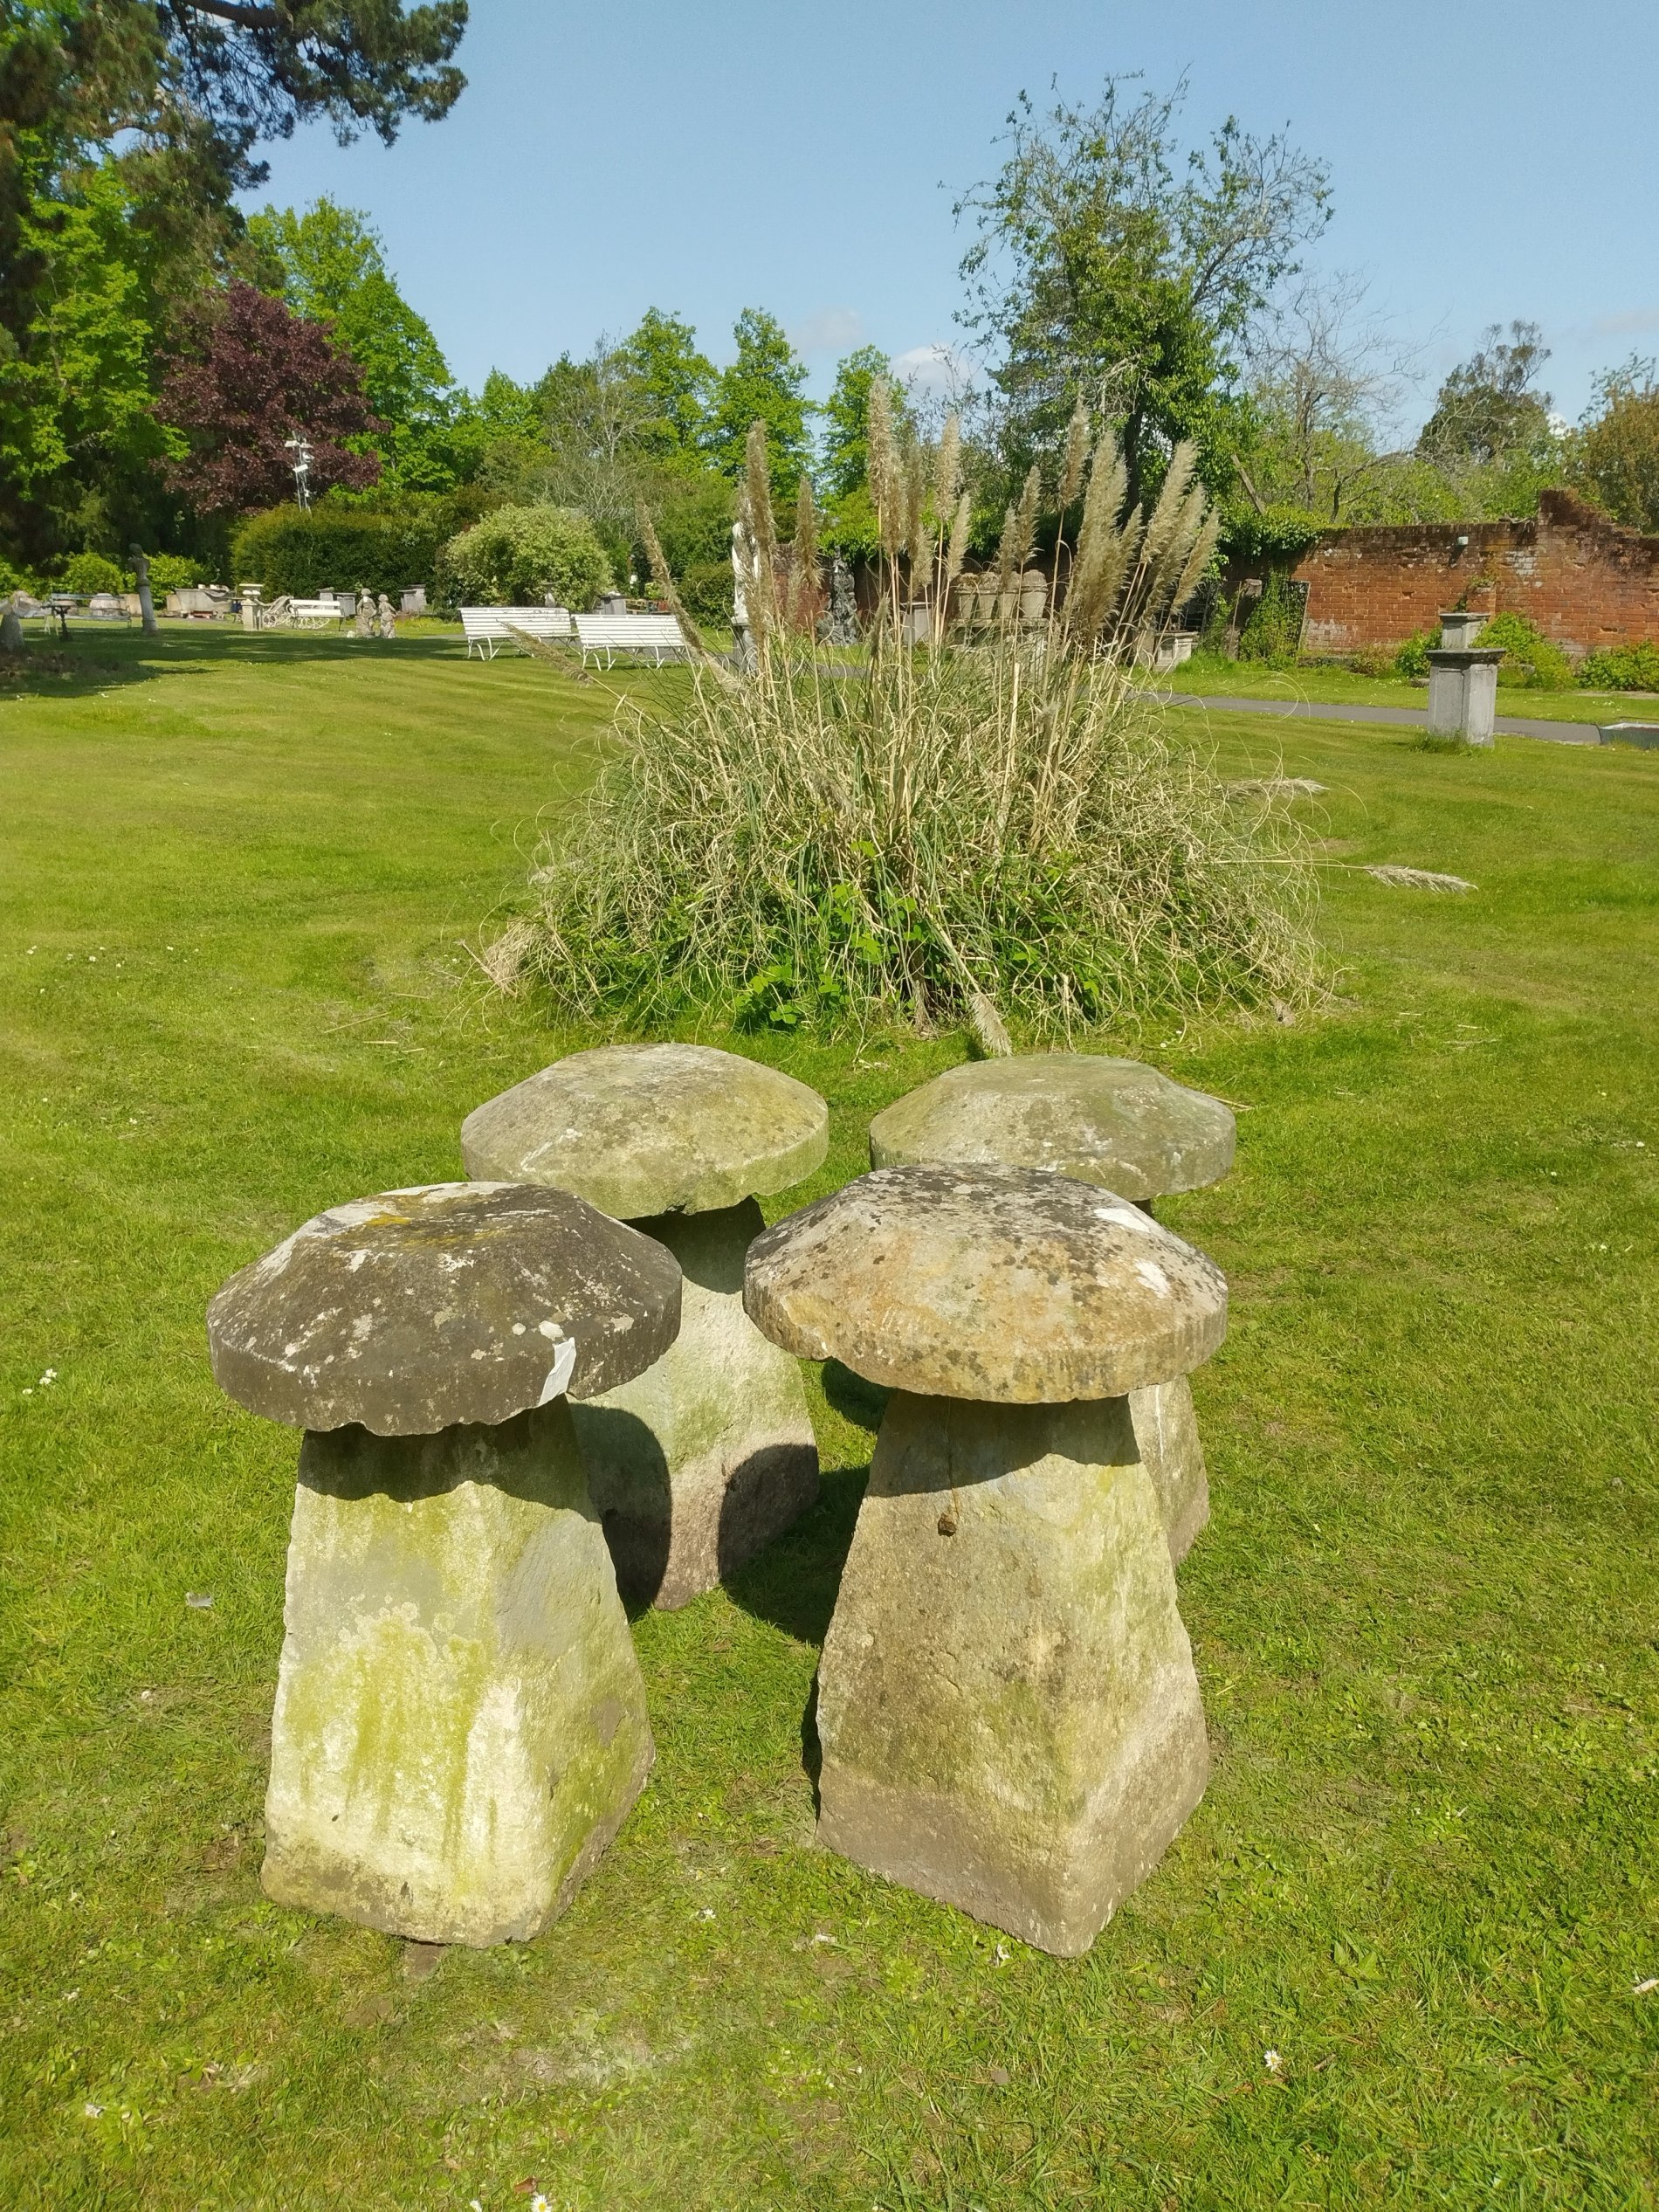 A set of four similar staddlestones